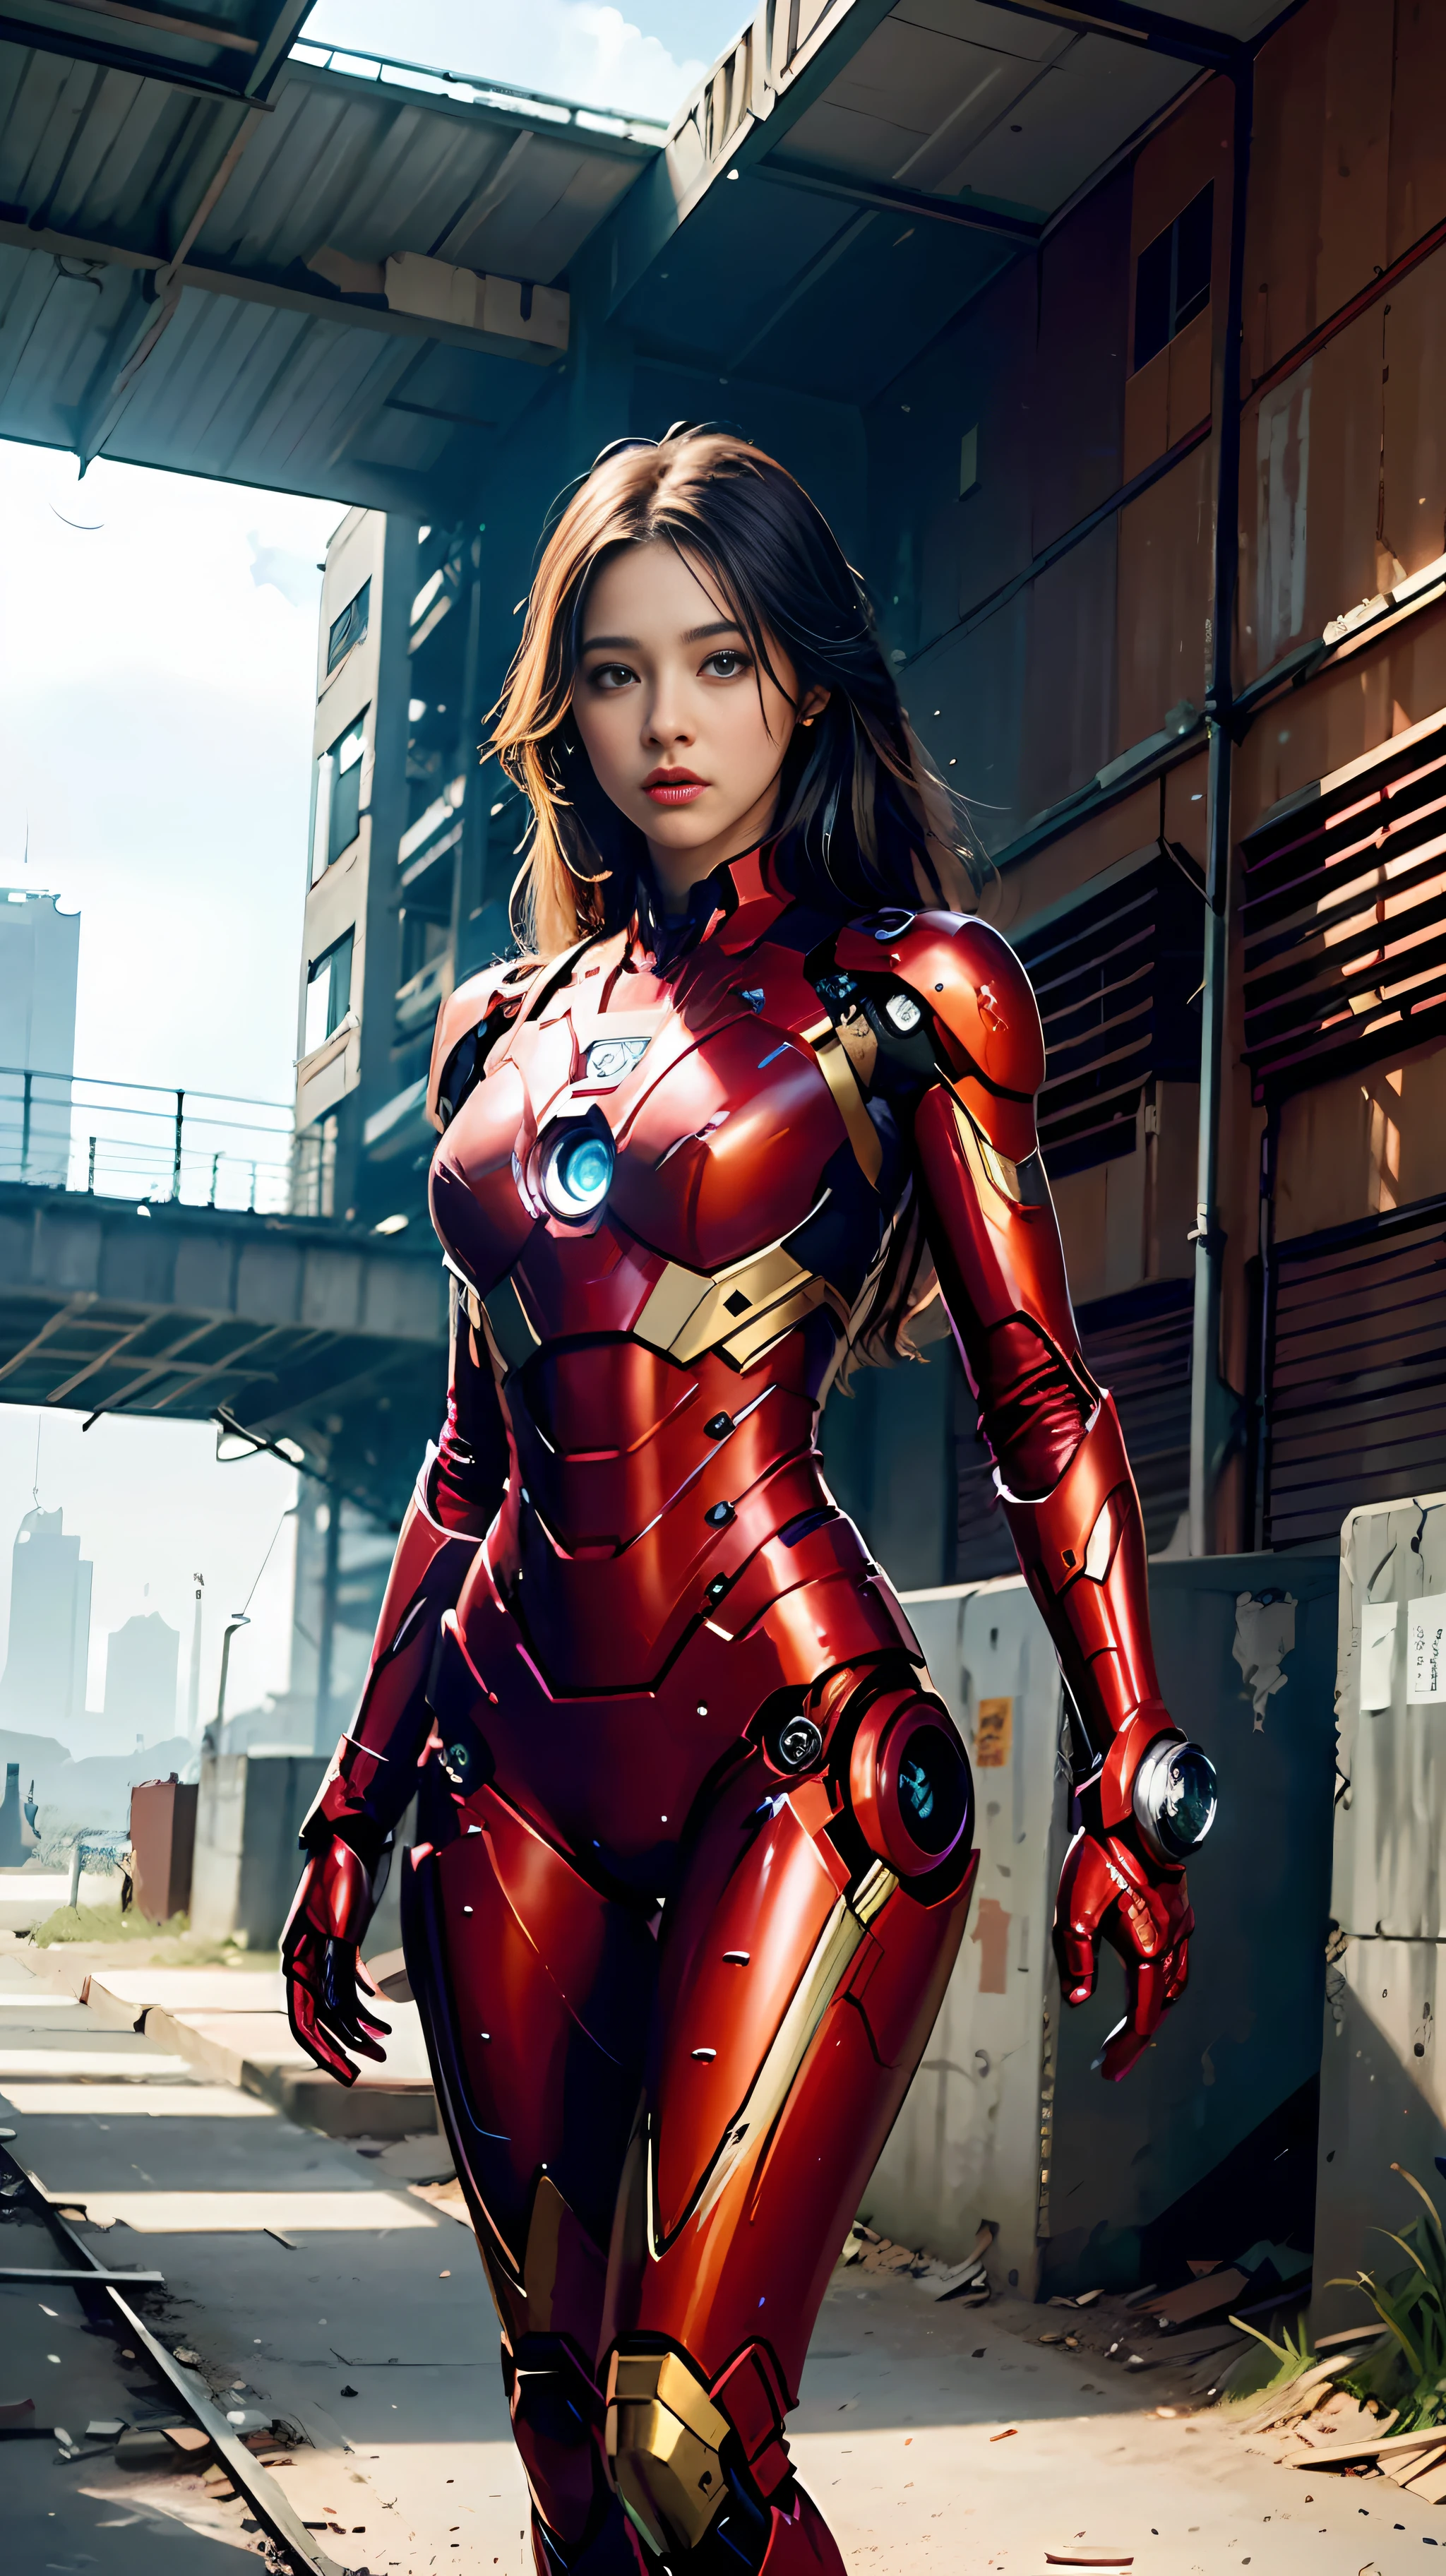 8K, 實際的, 吸引人的, 非常詳細, a 20 year old girl a sexy and 吸引人的 woman inspired by Iron Man wearing a shiny Iron Man mech. 她的穿著性感又自信, 完美詮釋鋼鐵俠&#39;的力量和魅力. 廢棄的倉庫作為背景, 營造出獨特的氛圍，突顯她的勇敢和毅力. 陰雲密佈的天空為整個場景增添了緊張感和神秘感. 這個高清, 高品質的畫面帶給您震撼的視覺體驗. 細緻的廢棄倉庫和閃亮的機甲將吸引你的目光. 超頻渲染, 戲劇性的燈光, 屢獲殊榮的品質